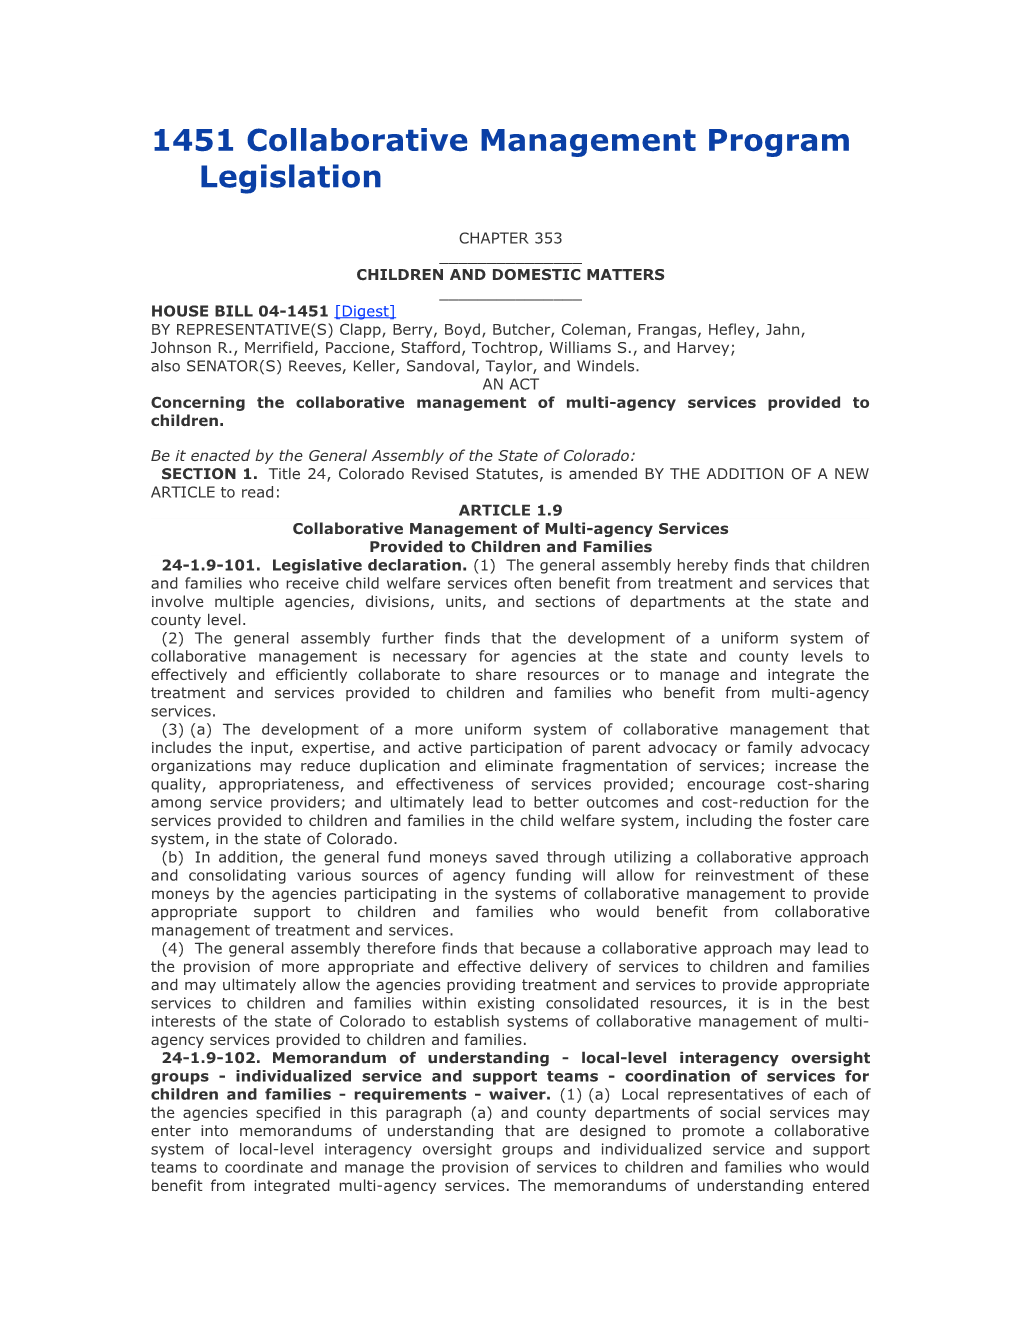 1451 Collaborative Management Program Legislation